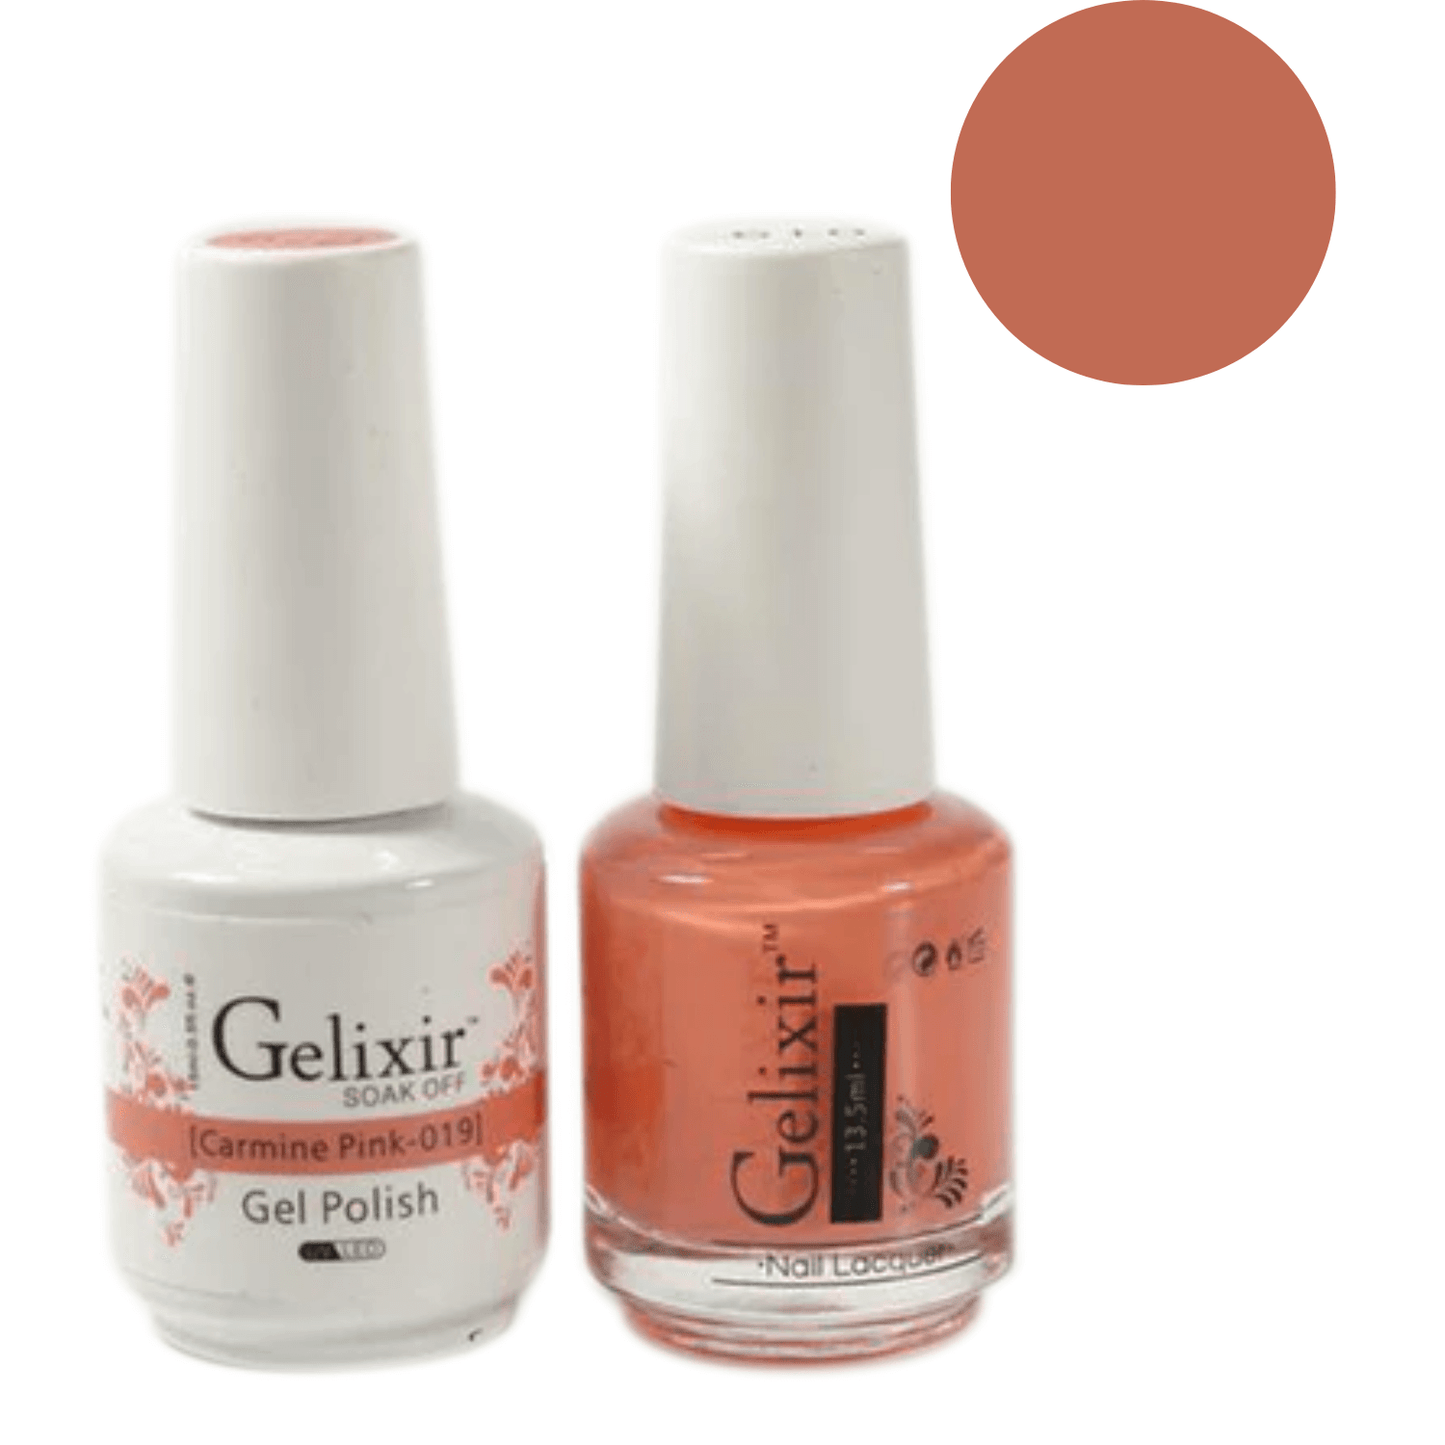 Gelixir Gel Polish & Nail Lacquer Duo - Carmine Pink 019 - Premier Nail Supply 